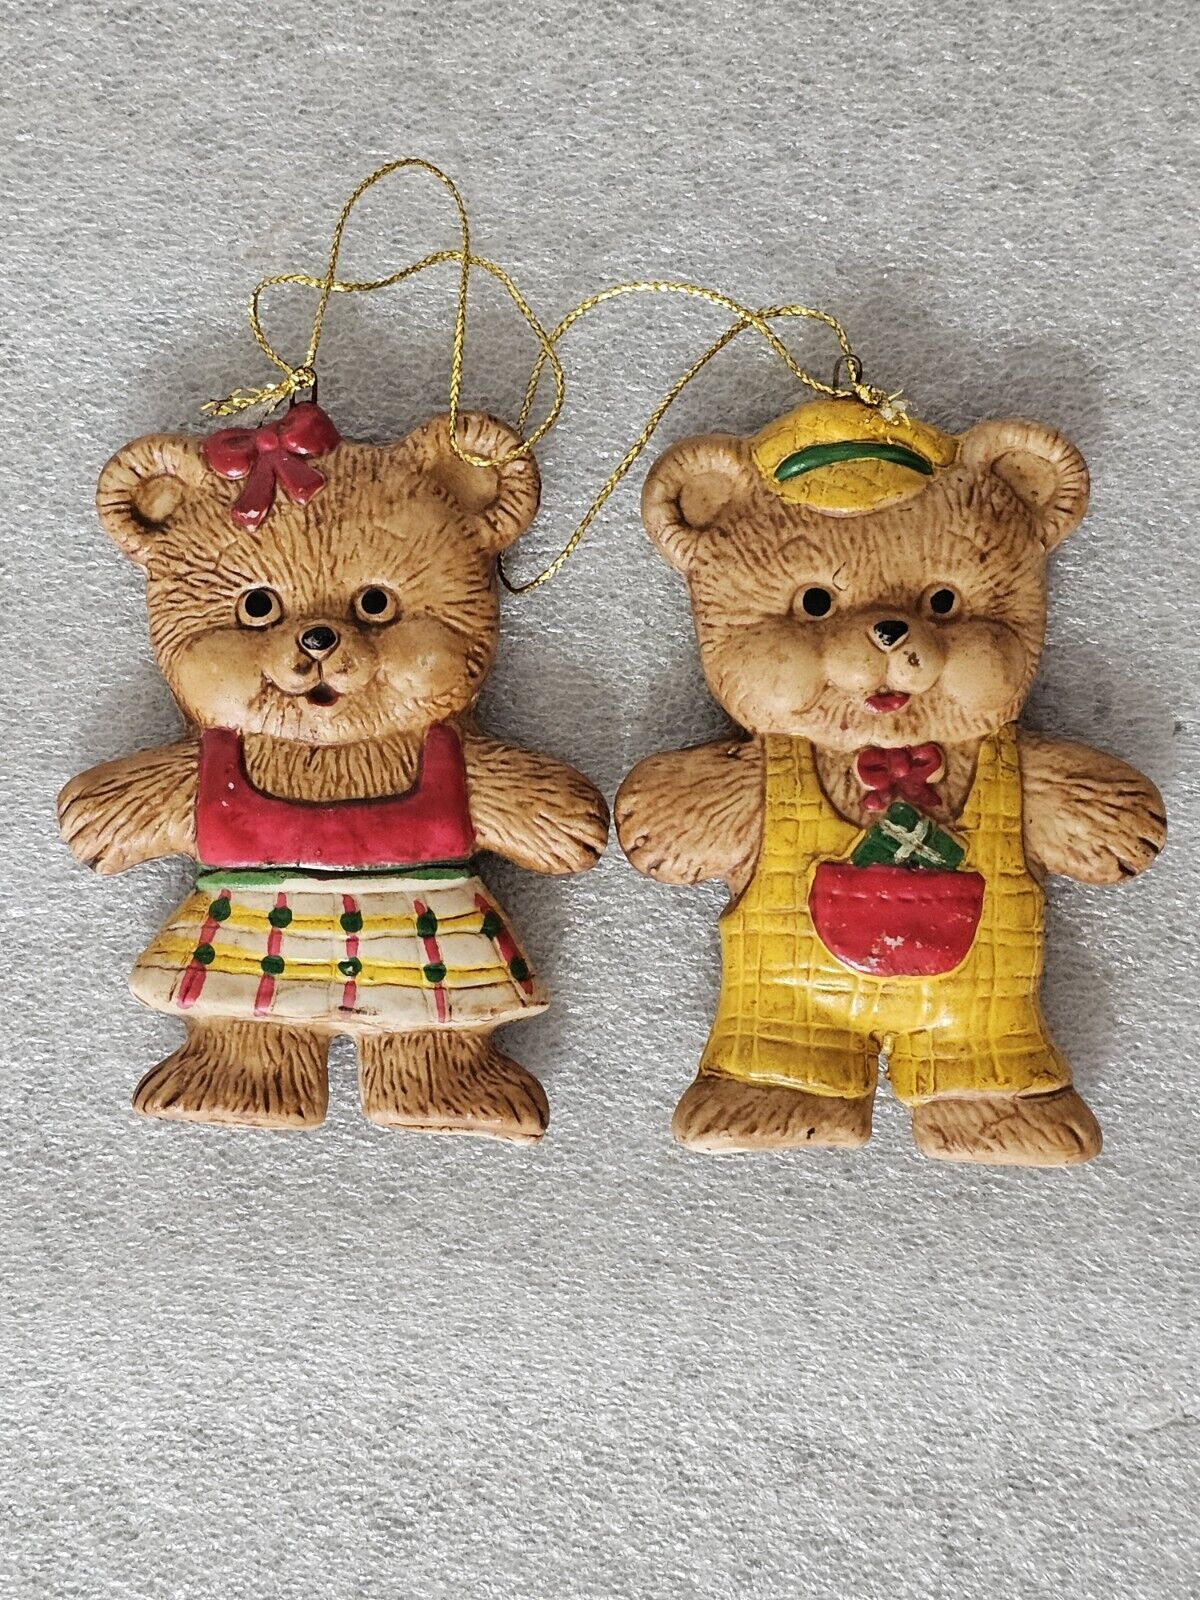 Two Ceramic Pair of Bears, Christmas Ornaments, Boy, Girl, Vintage